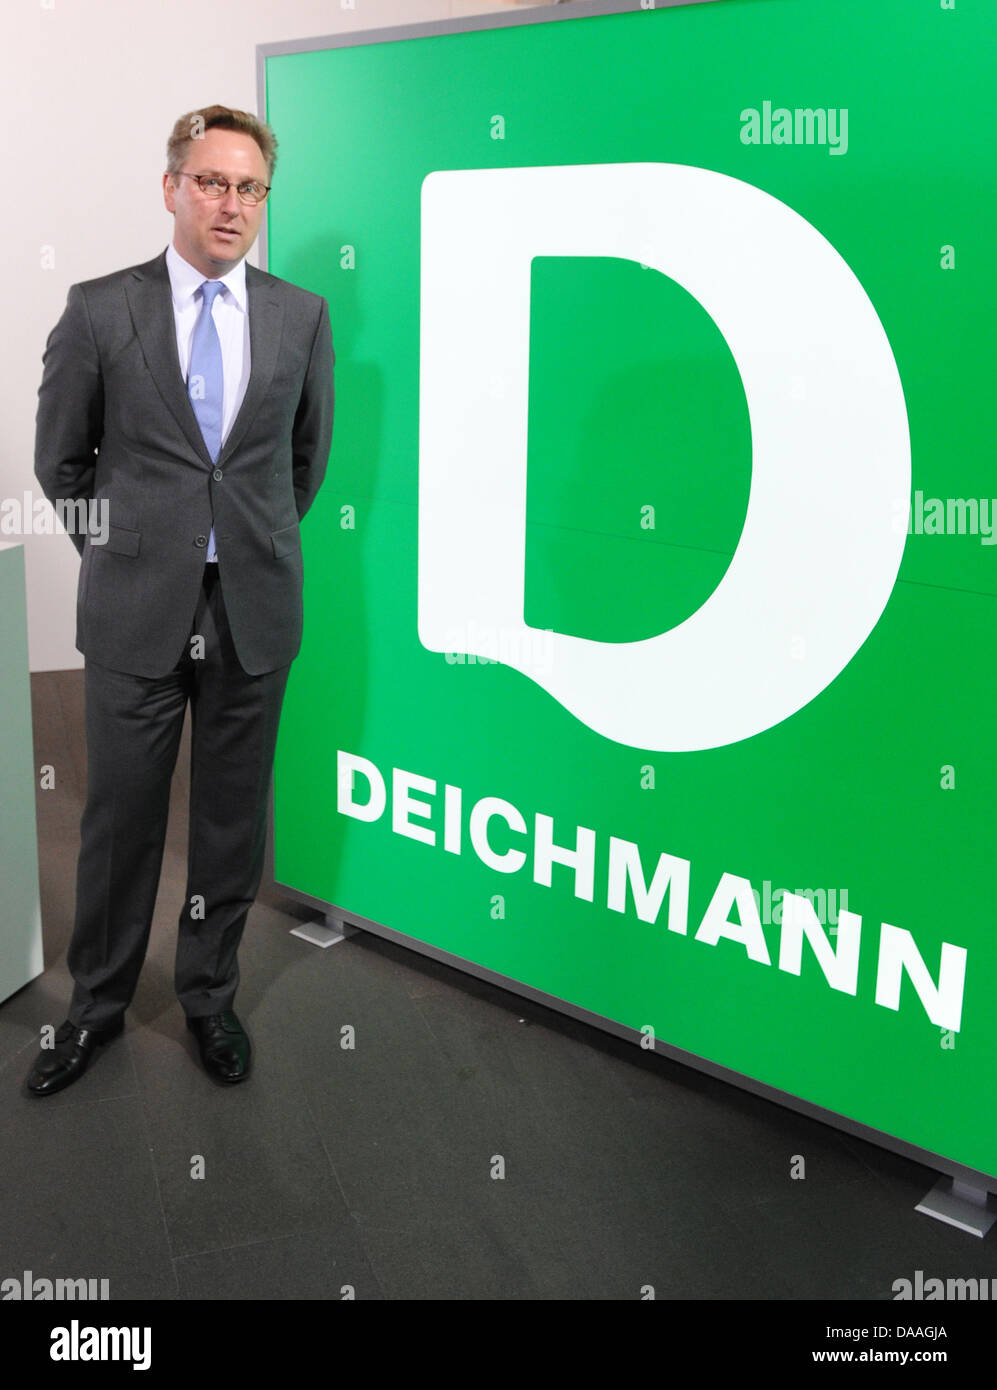 البطالة غامض deichmann herning job - pharma-chemicalsafety.com